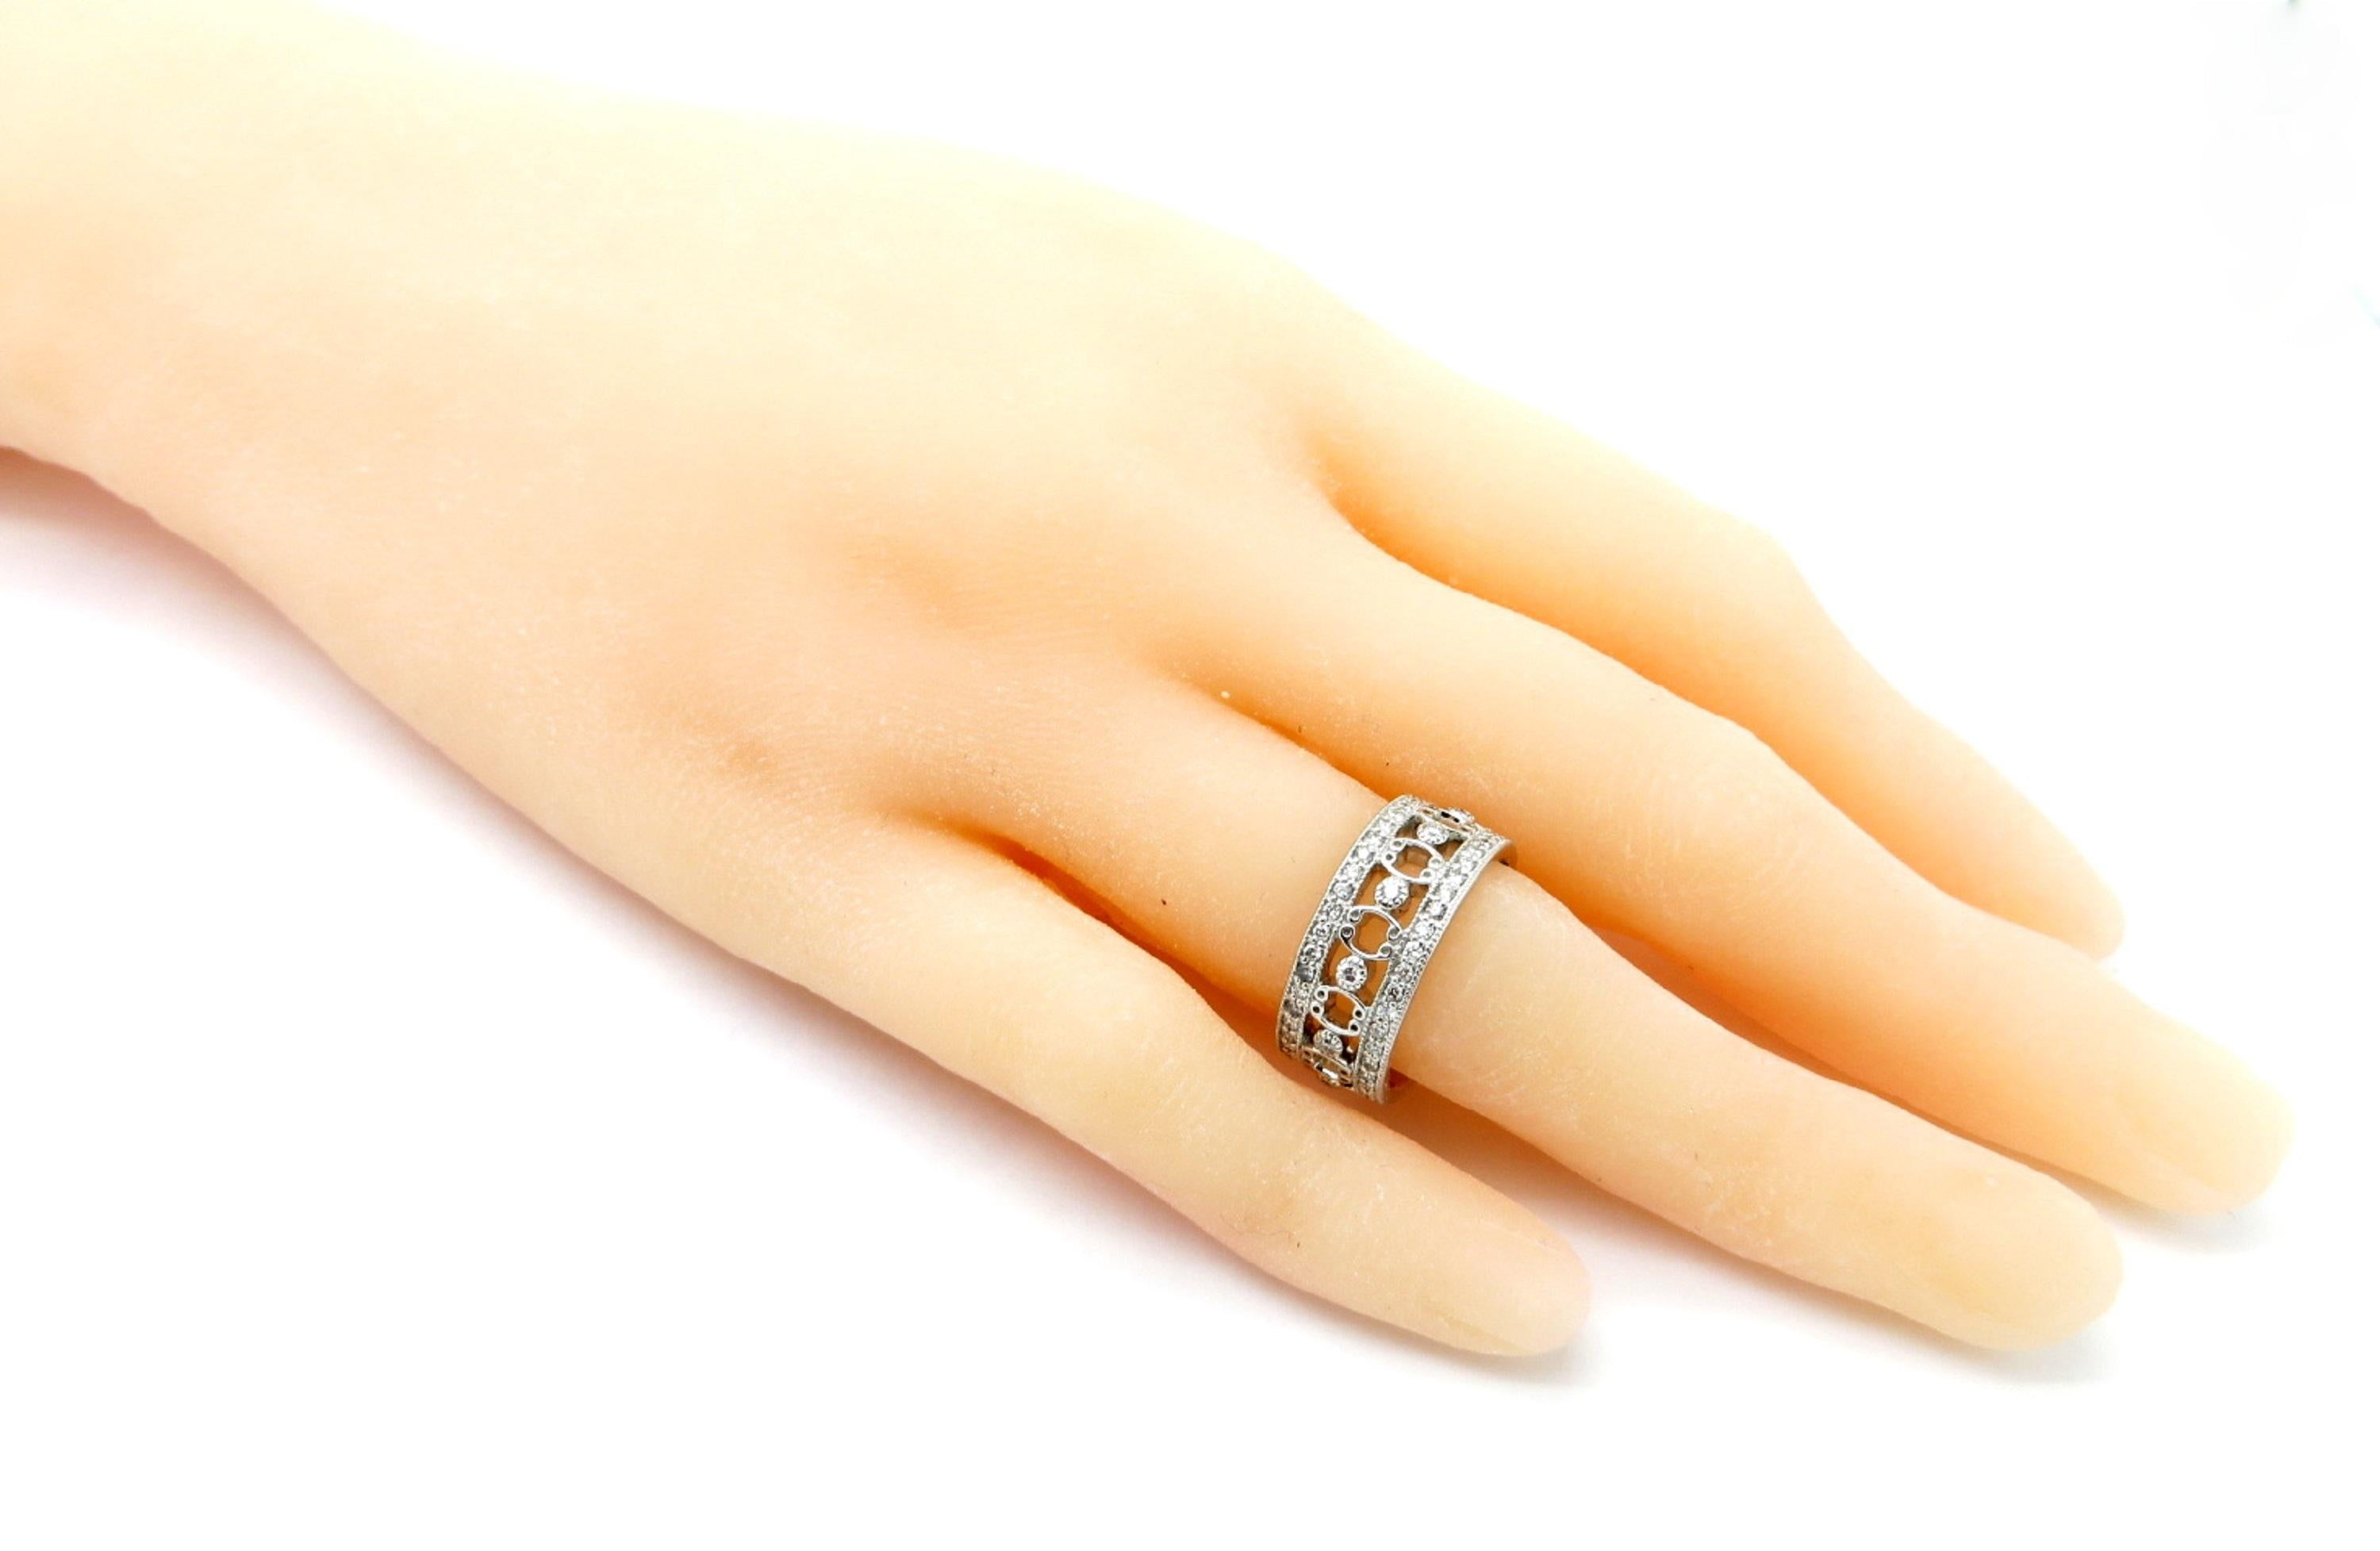 Designer Jude Frances Diamond 18 Karat White Gold Eternity Band Ring In Excellent Condition For Sale In Scottsdale, AZ